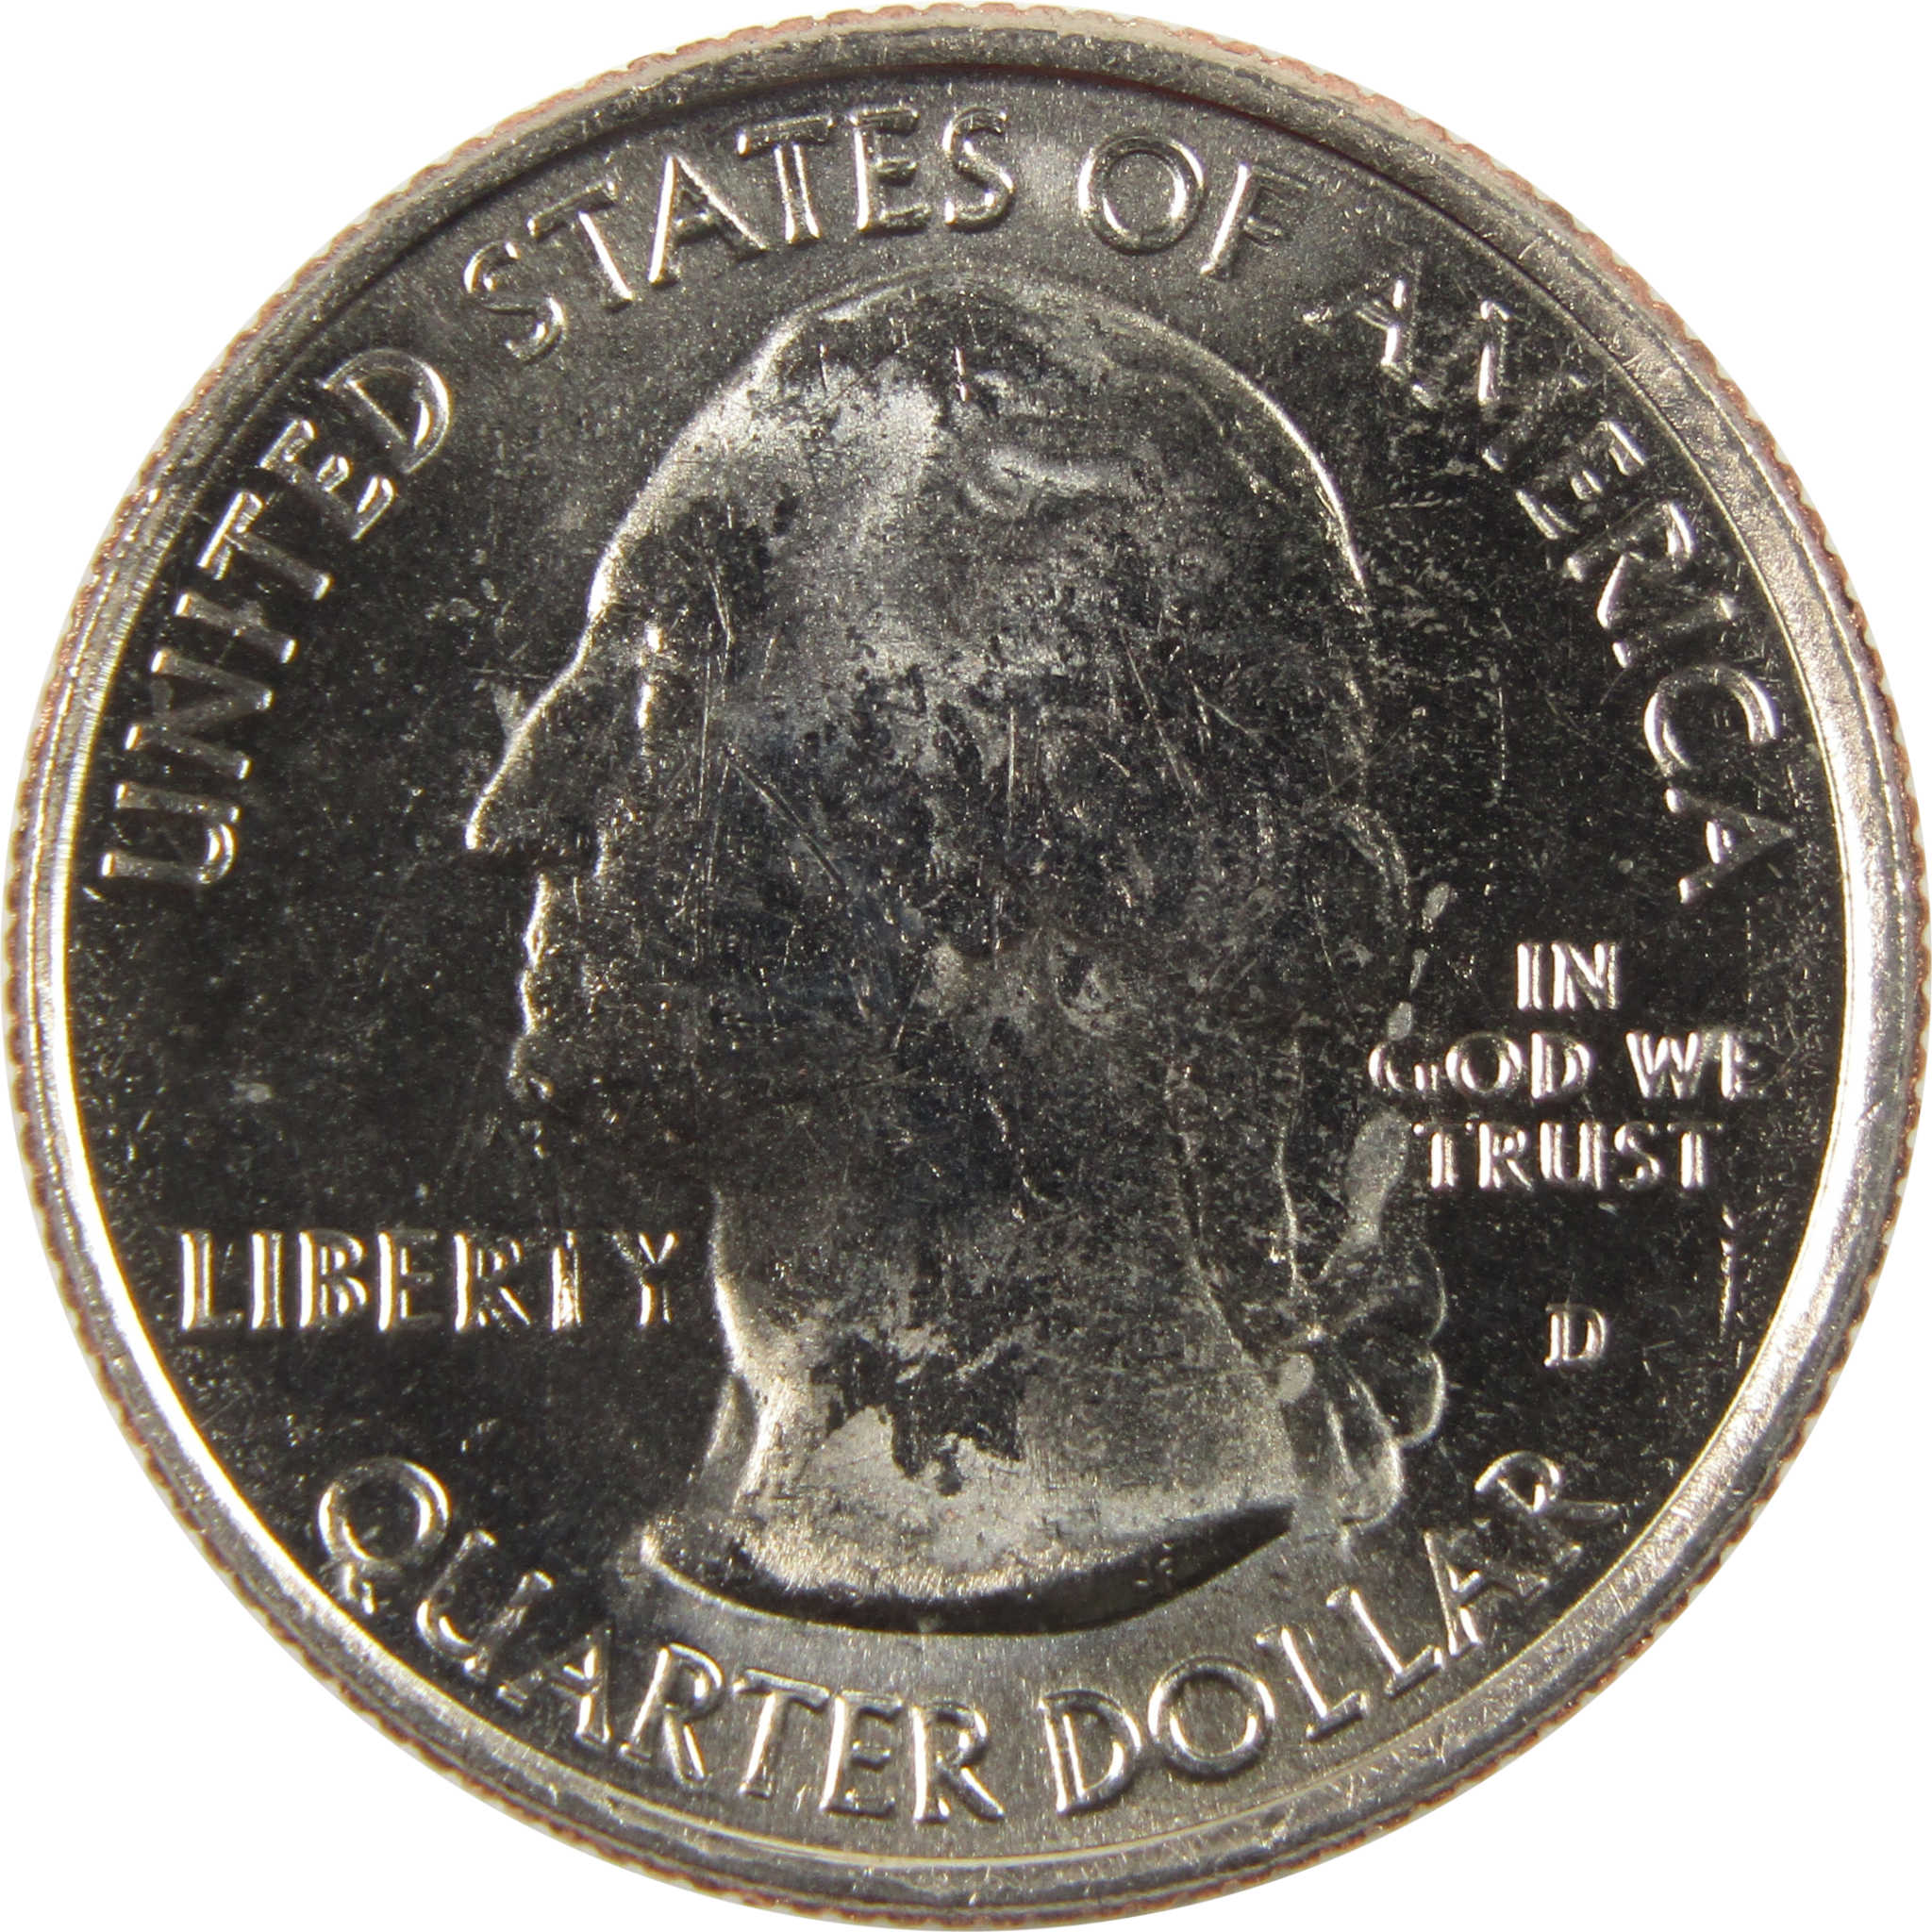 2010 D Yosemite National Park Quarter BU Uncirculated Clad 25c Coin